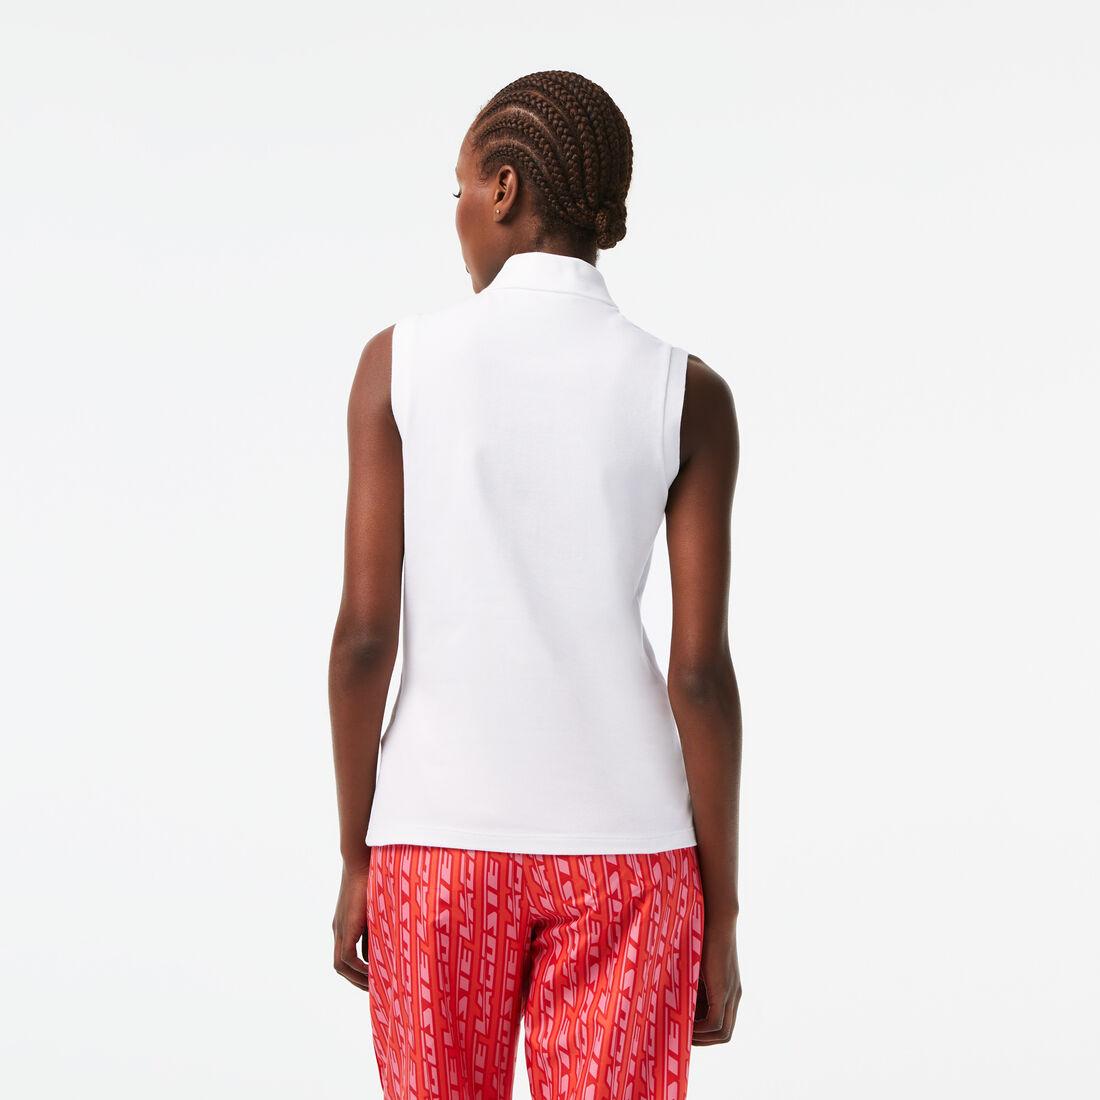 Lacoste Slim Fit Ärmellose Baumwoll Piqué Polo Shirts Damen Weiß | CLKU-94687